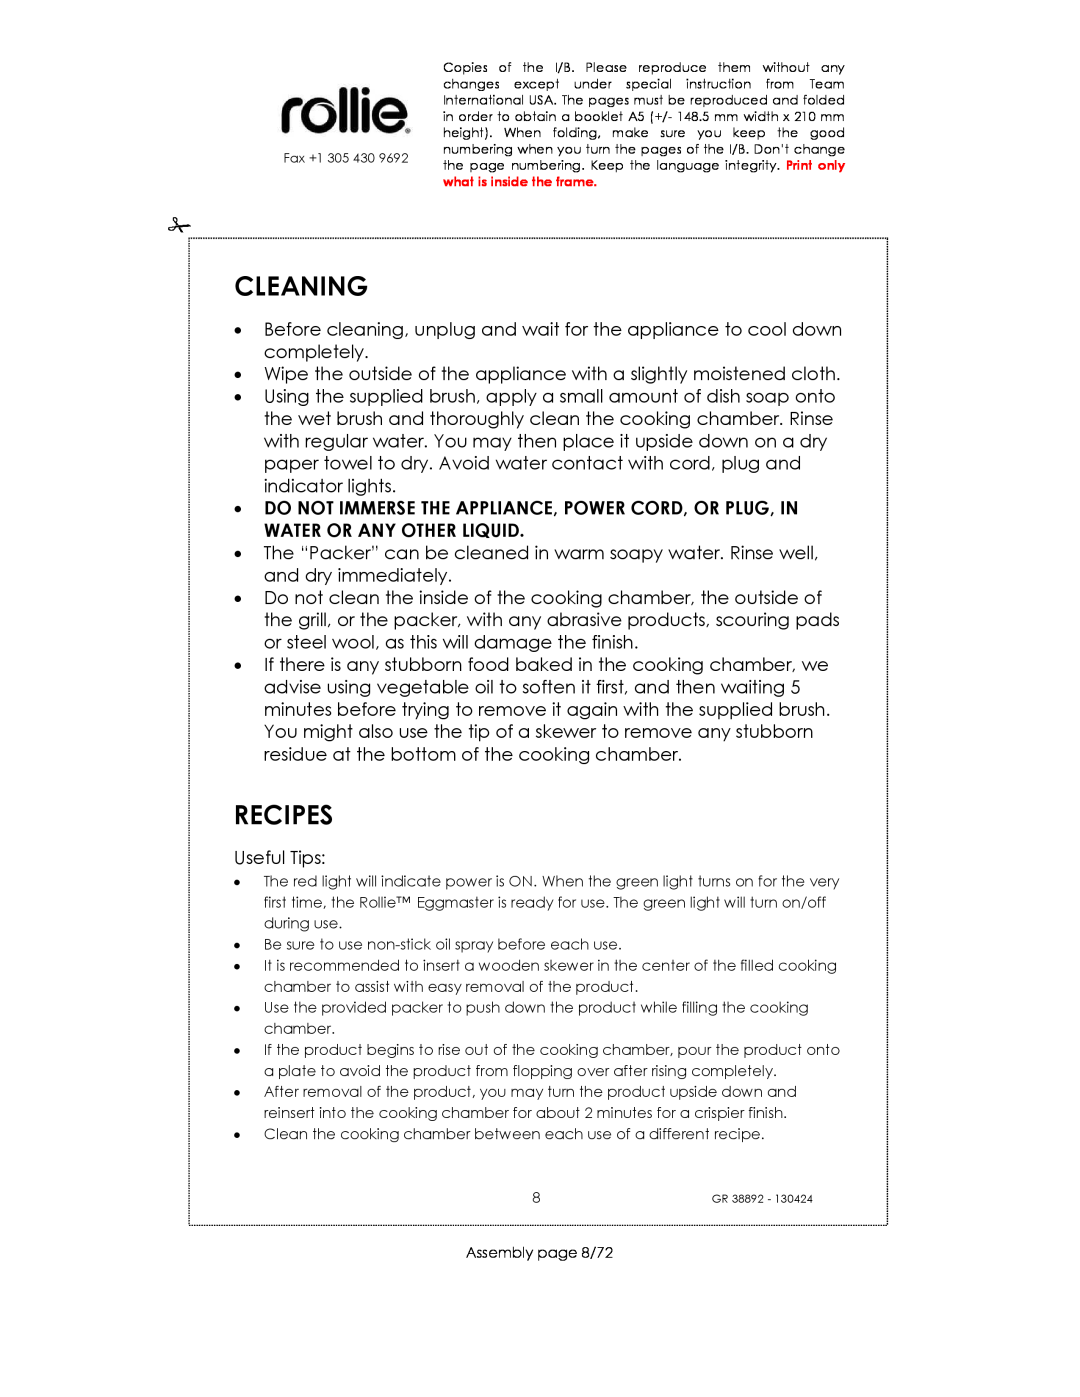 Kalorik GR38892 manual Cleaning, Recipes 